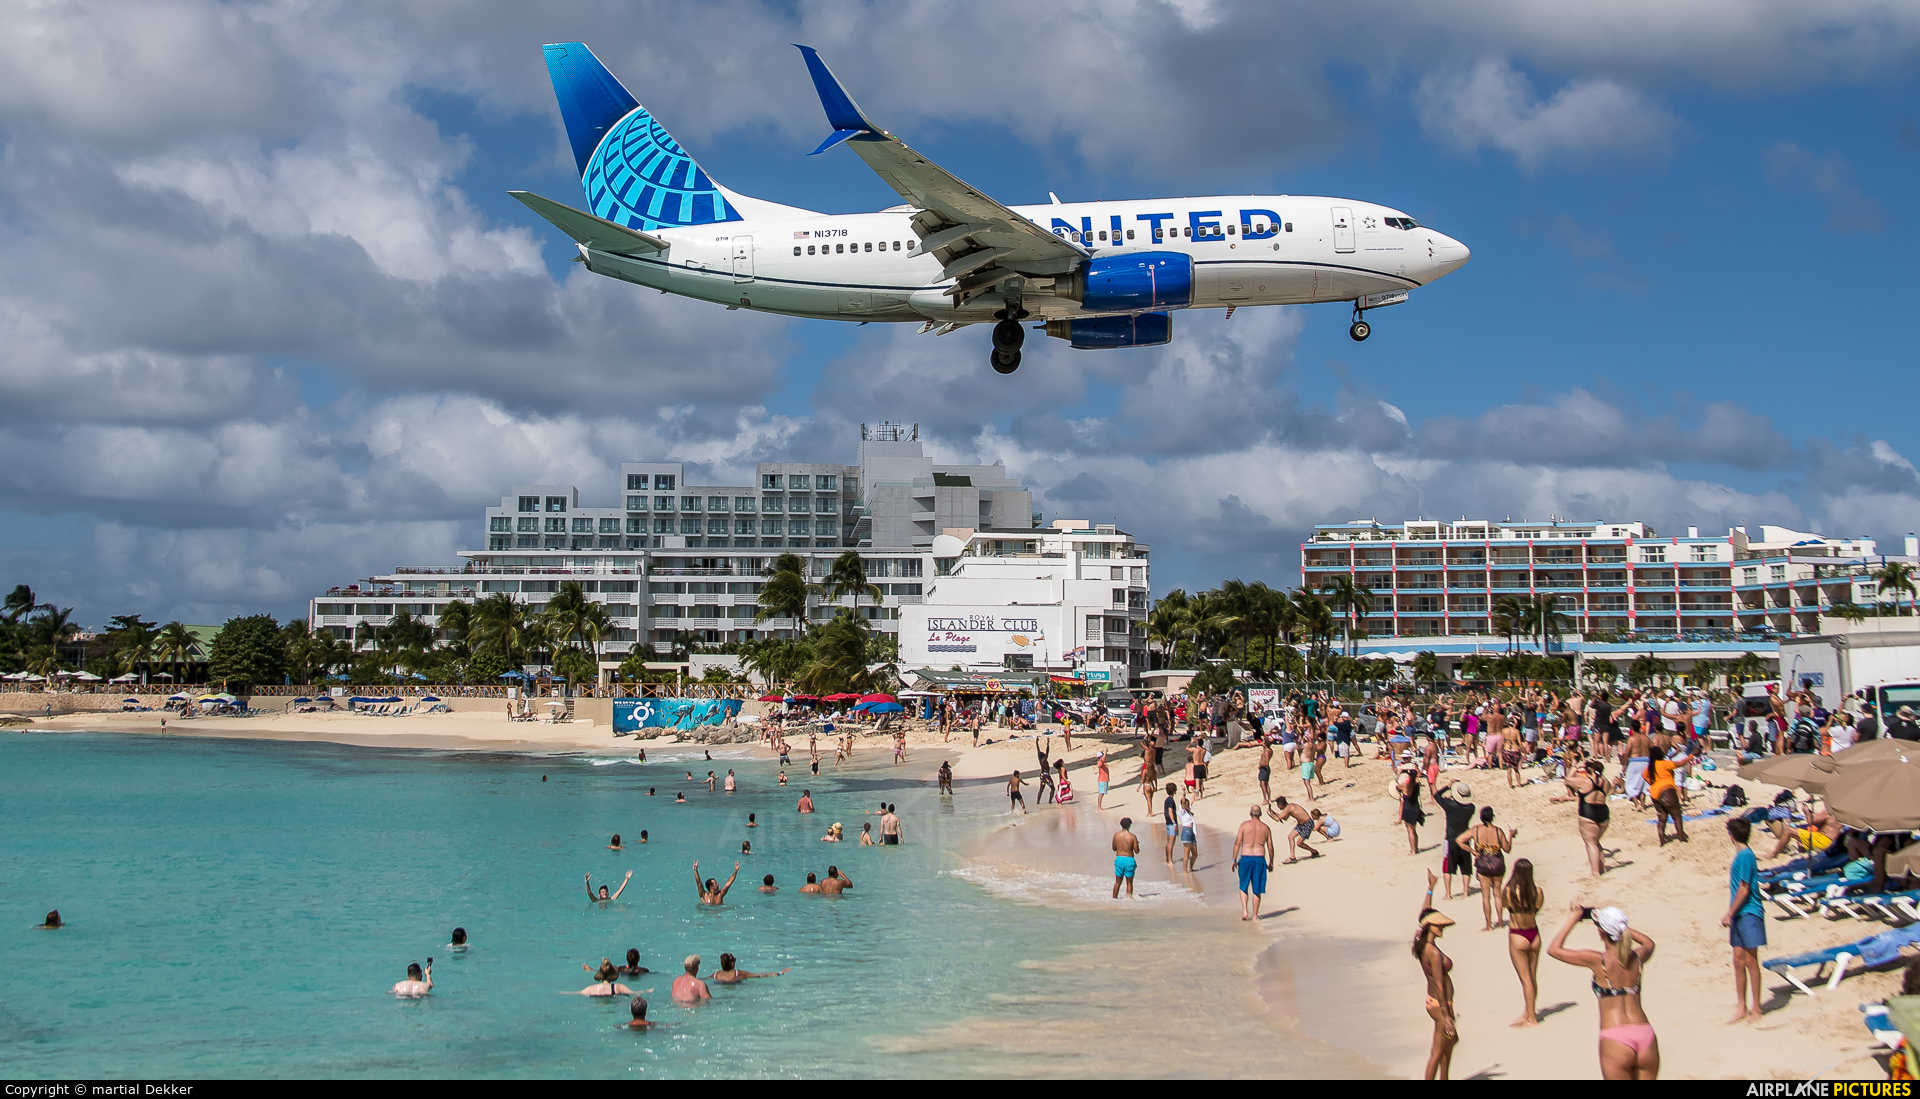 United Airlines N13718 aircraft at Sint Maarten - Princess Juliana Intl